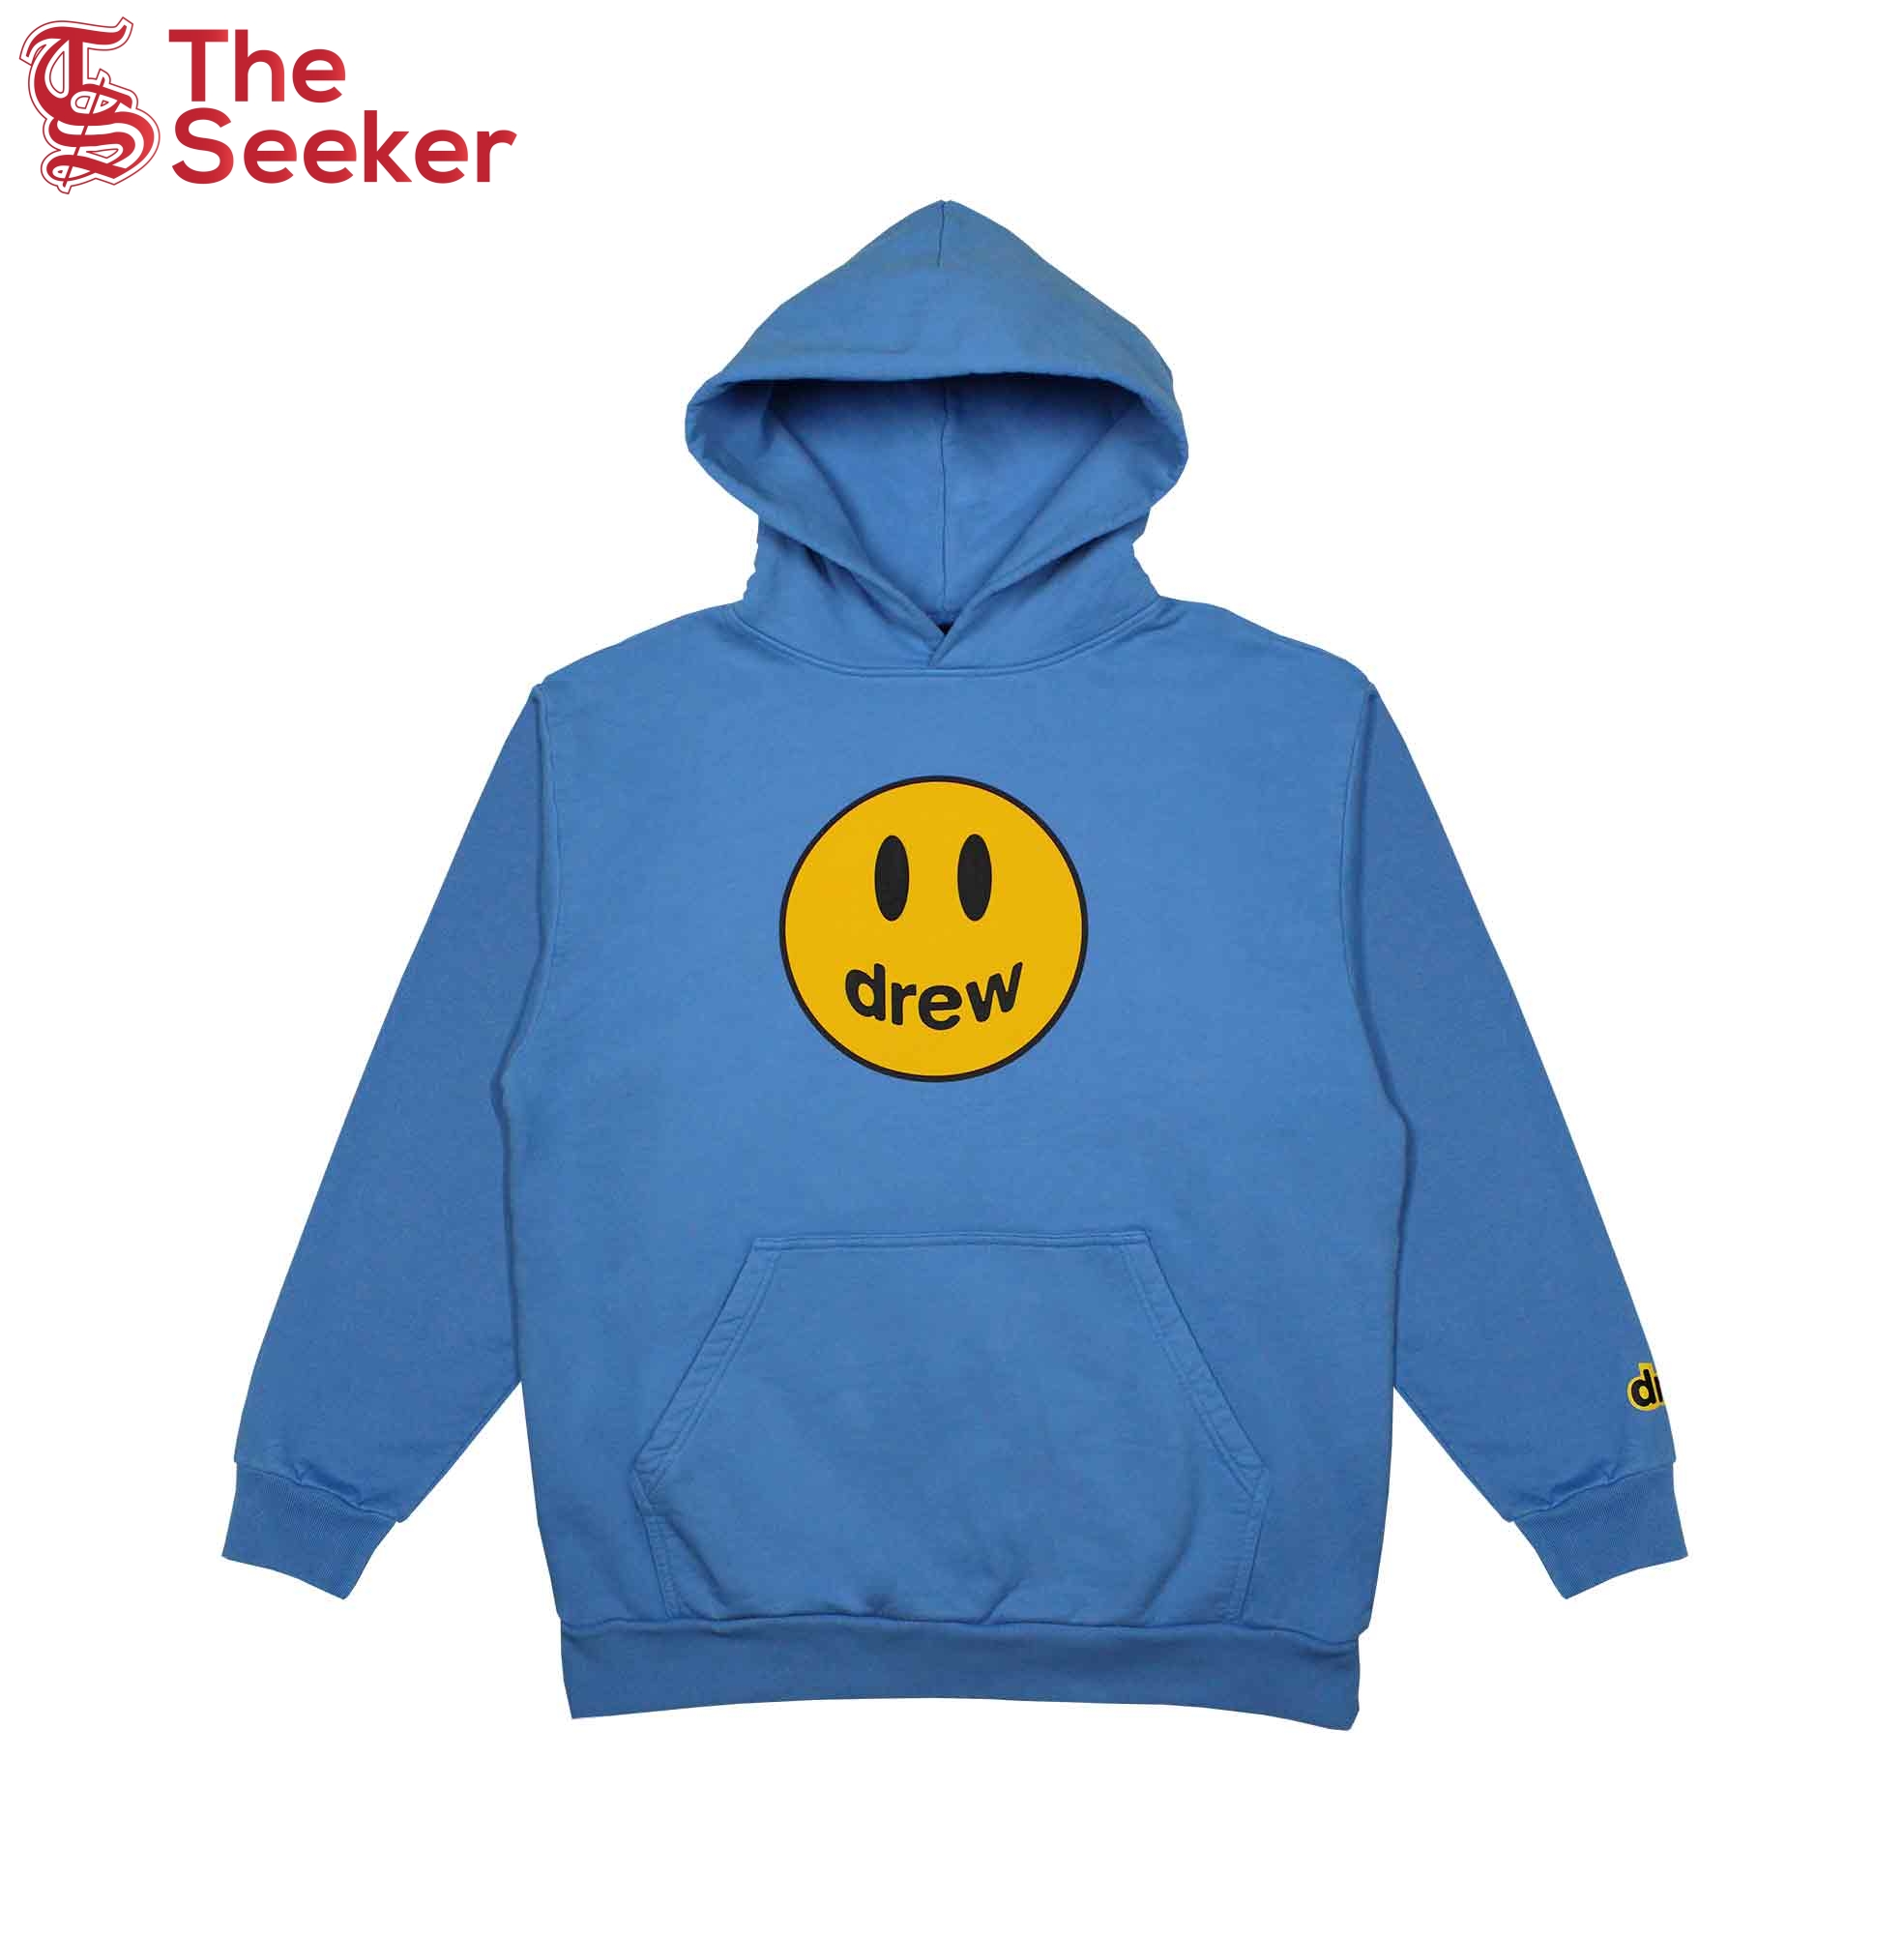 drew house mascot hoodie sky blue